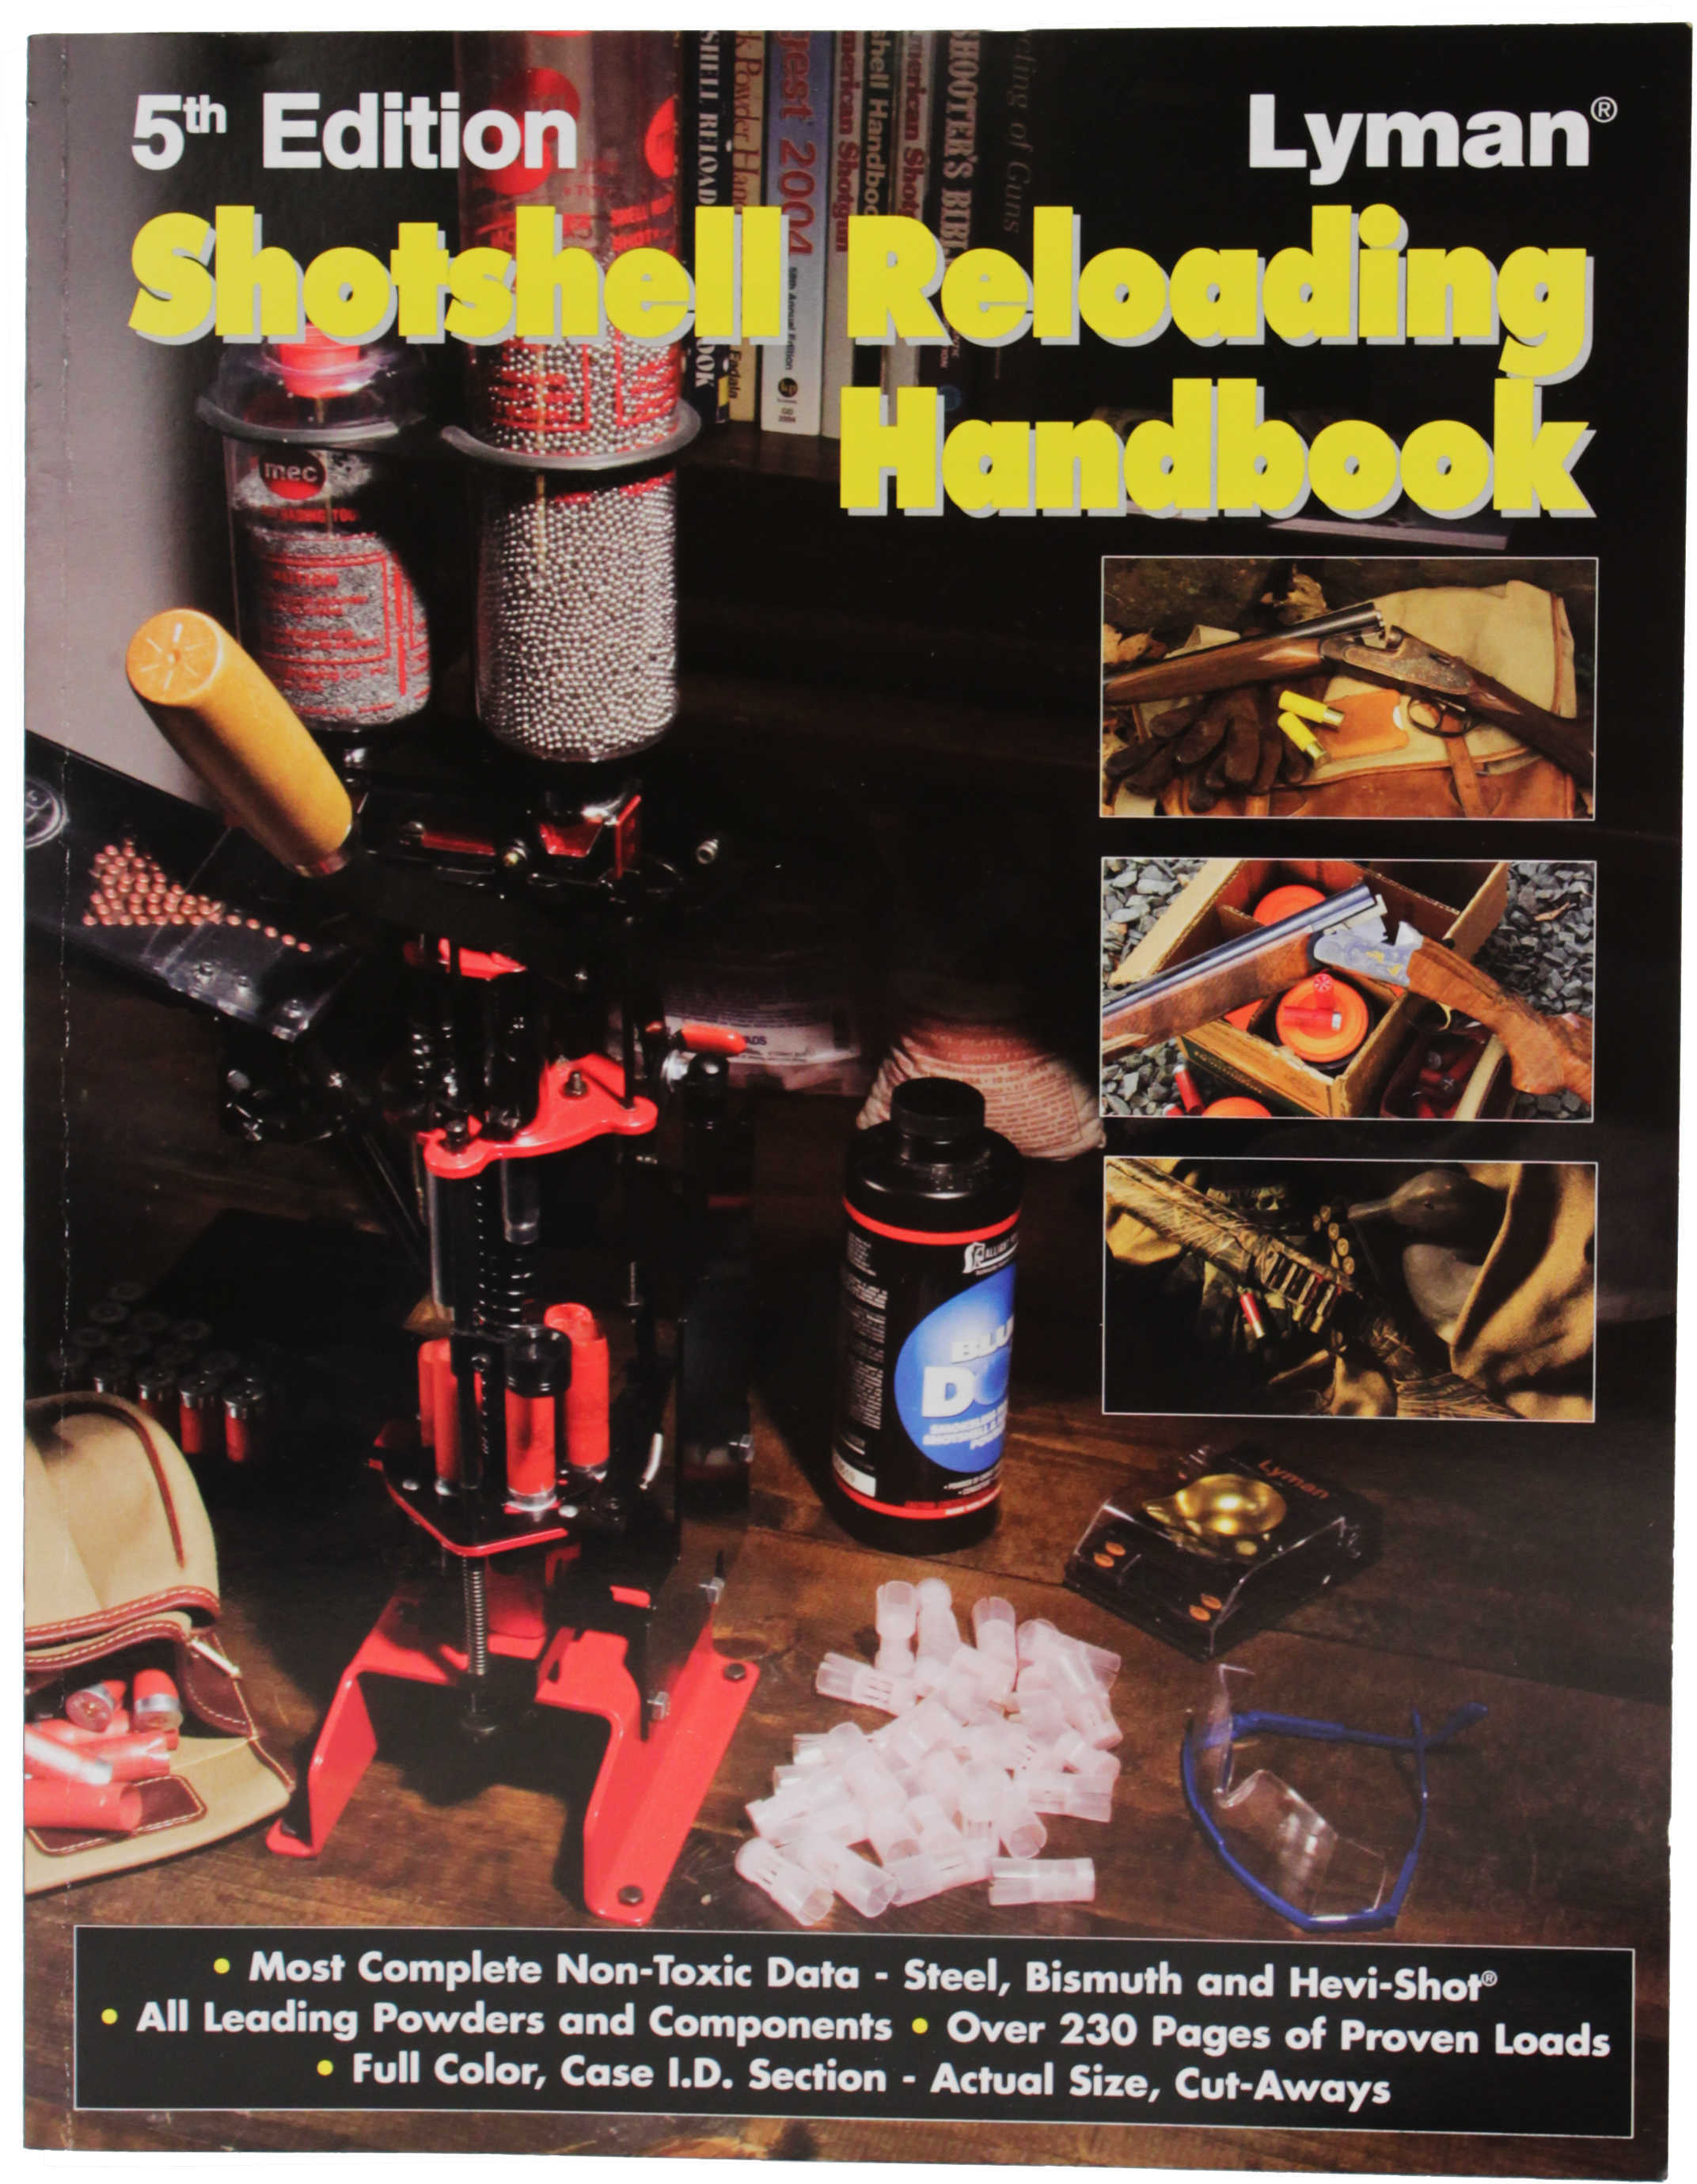 Lyman 5th Edition Shotshell Reloading Handbook